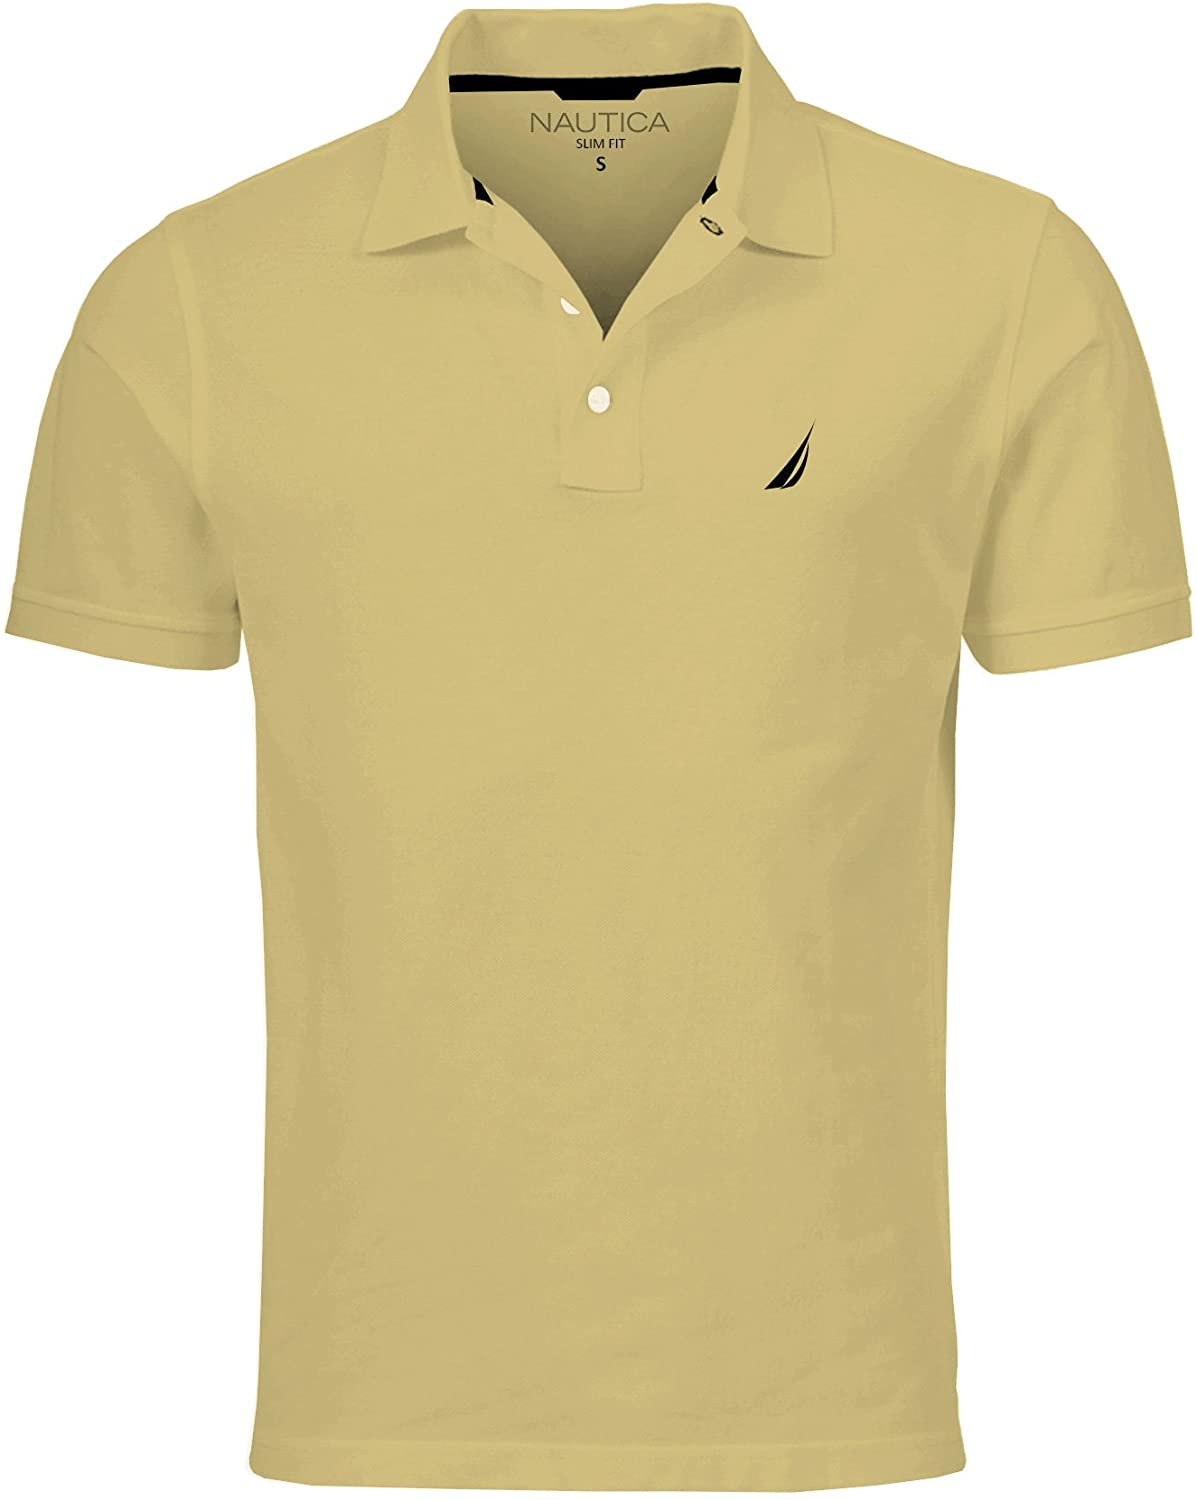 Nautica Men's Slim Fit Short Sleeve Solid Pique Logo Polo Shirt